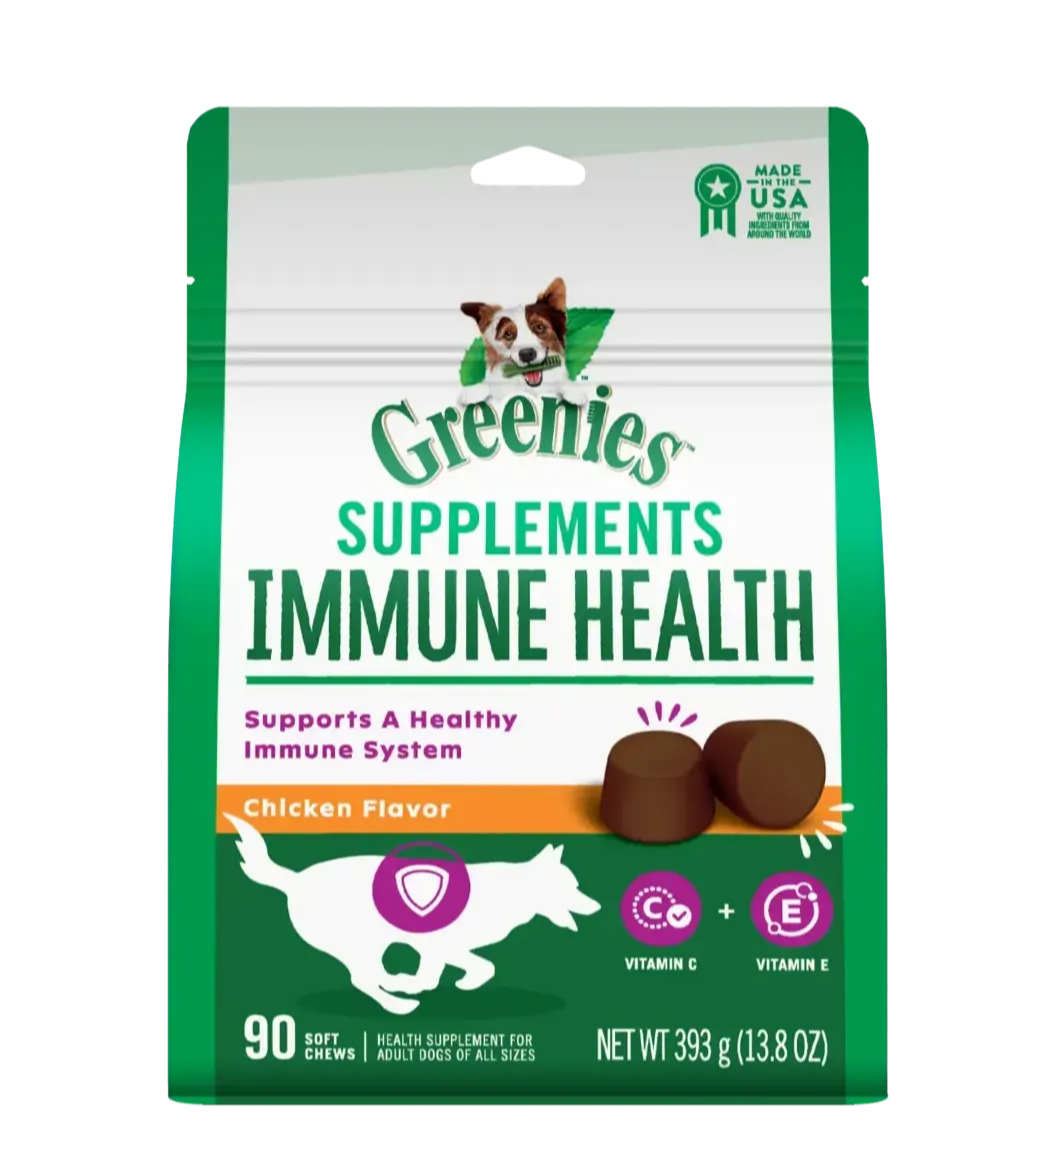 immune health supplement pack